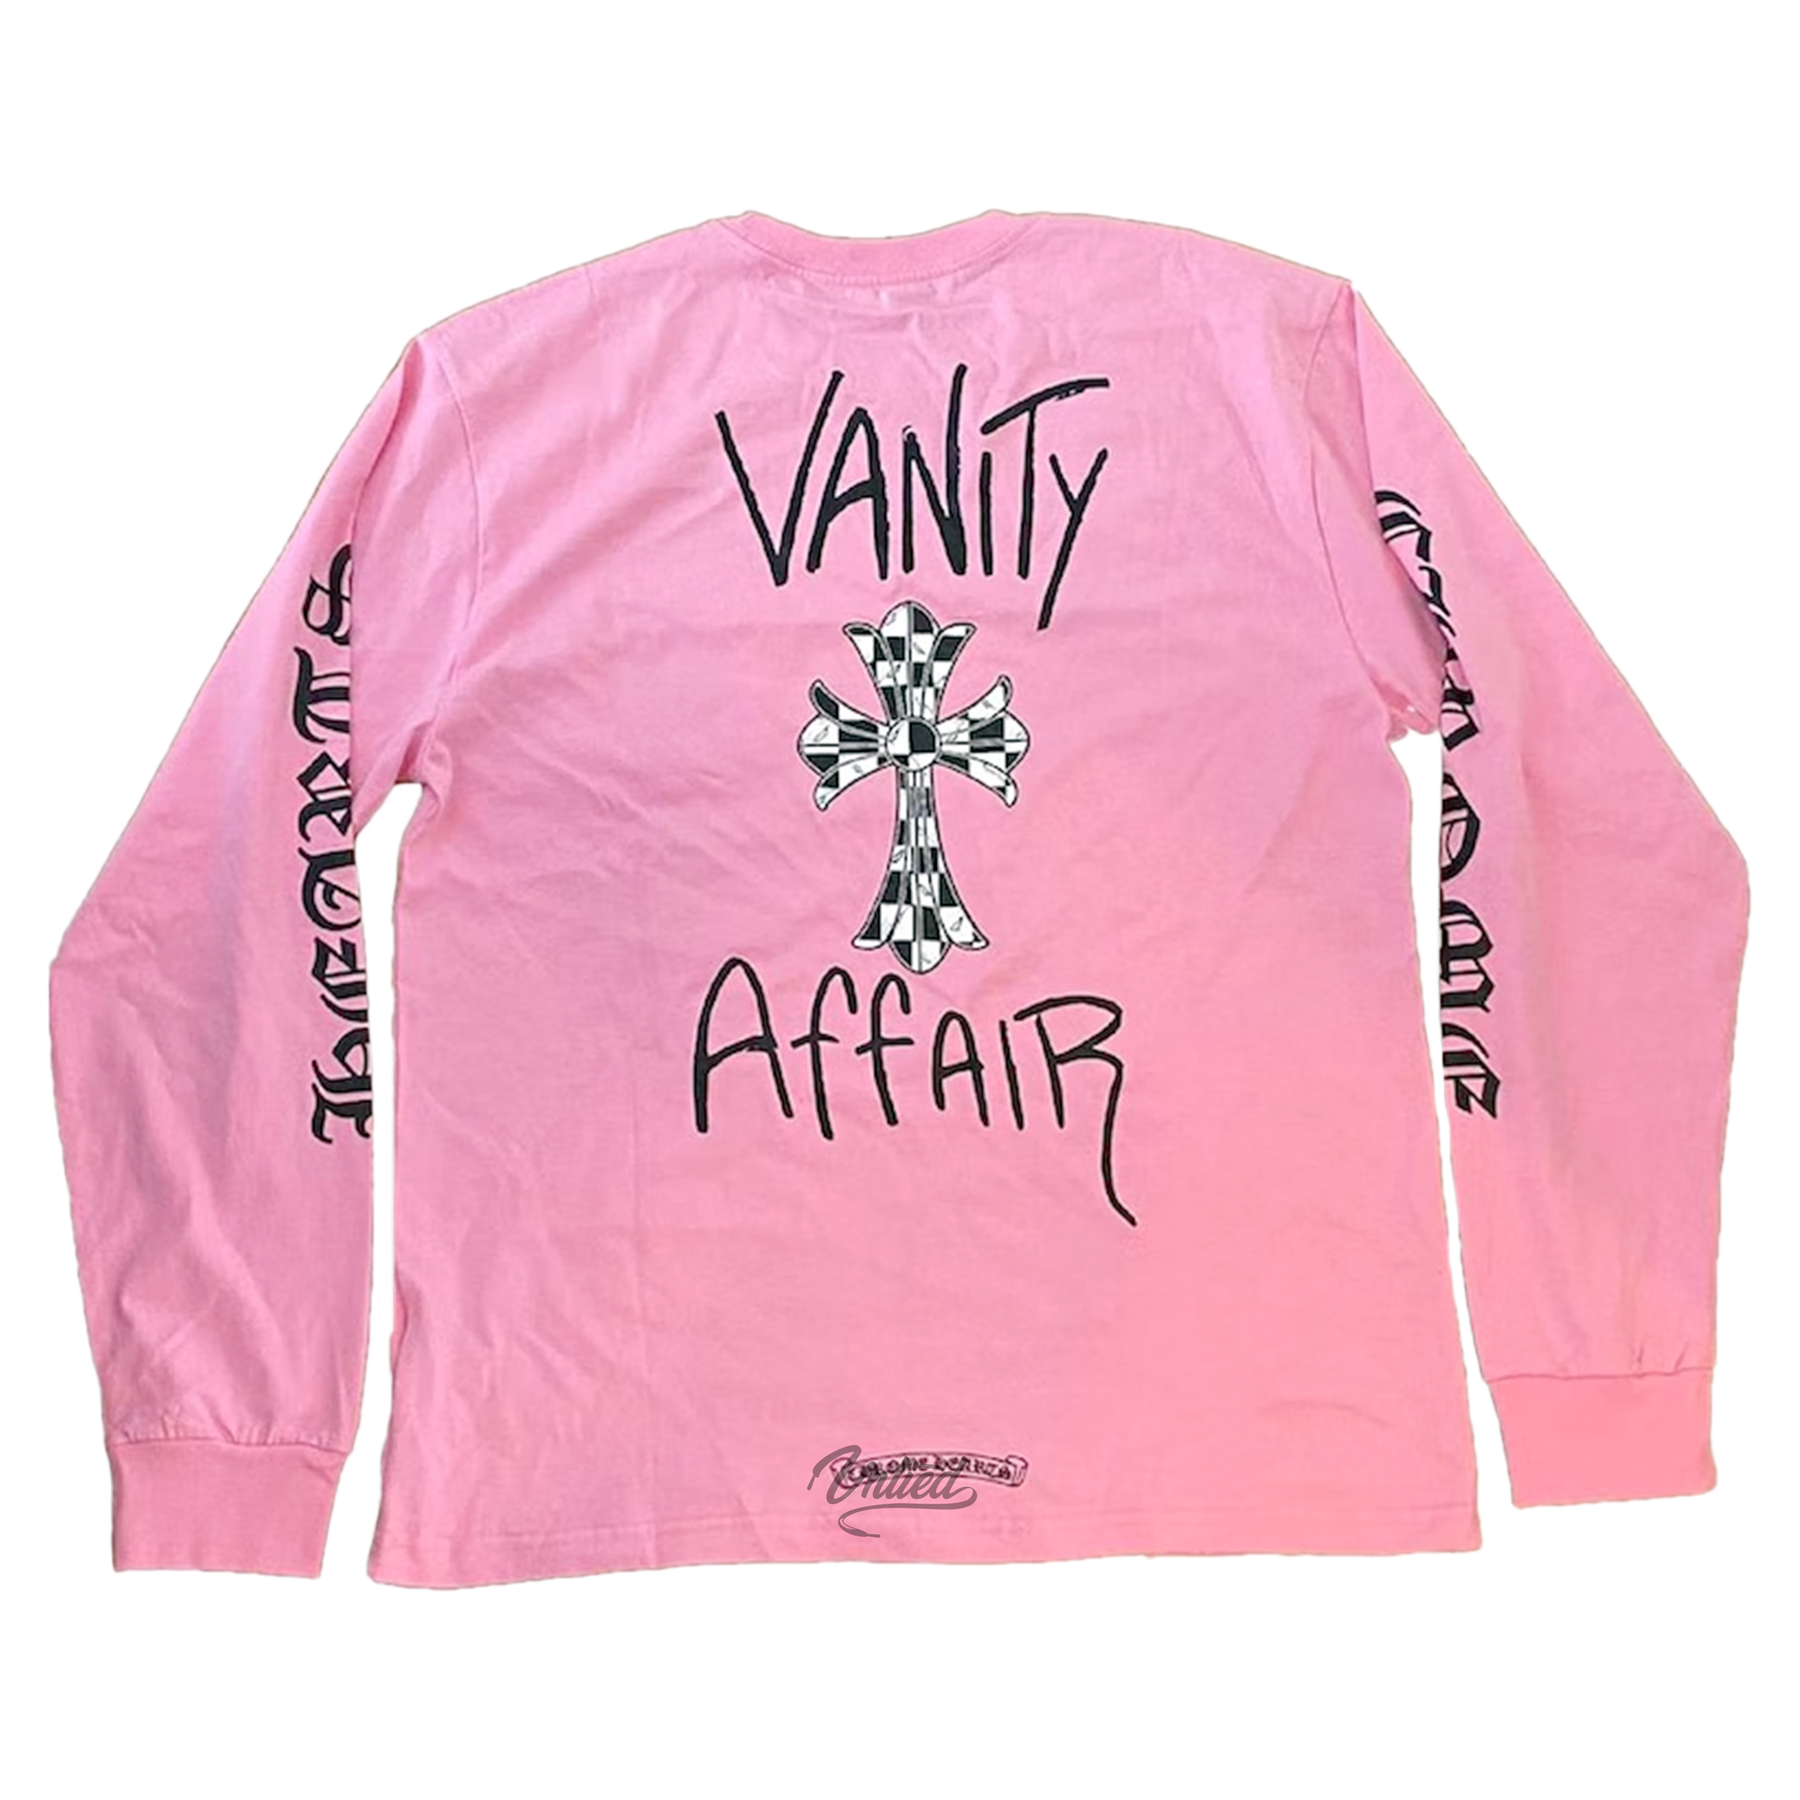 Chrome Hearts Matty Boy L/S Vanity Affair "Pink"